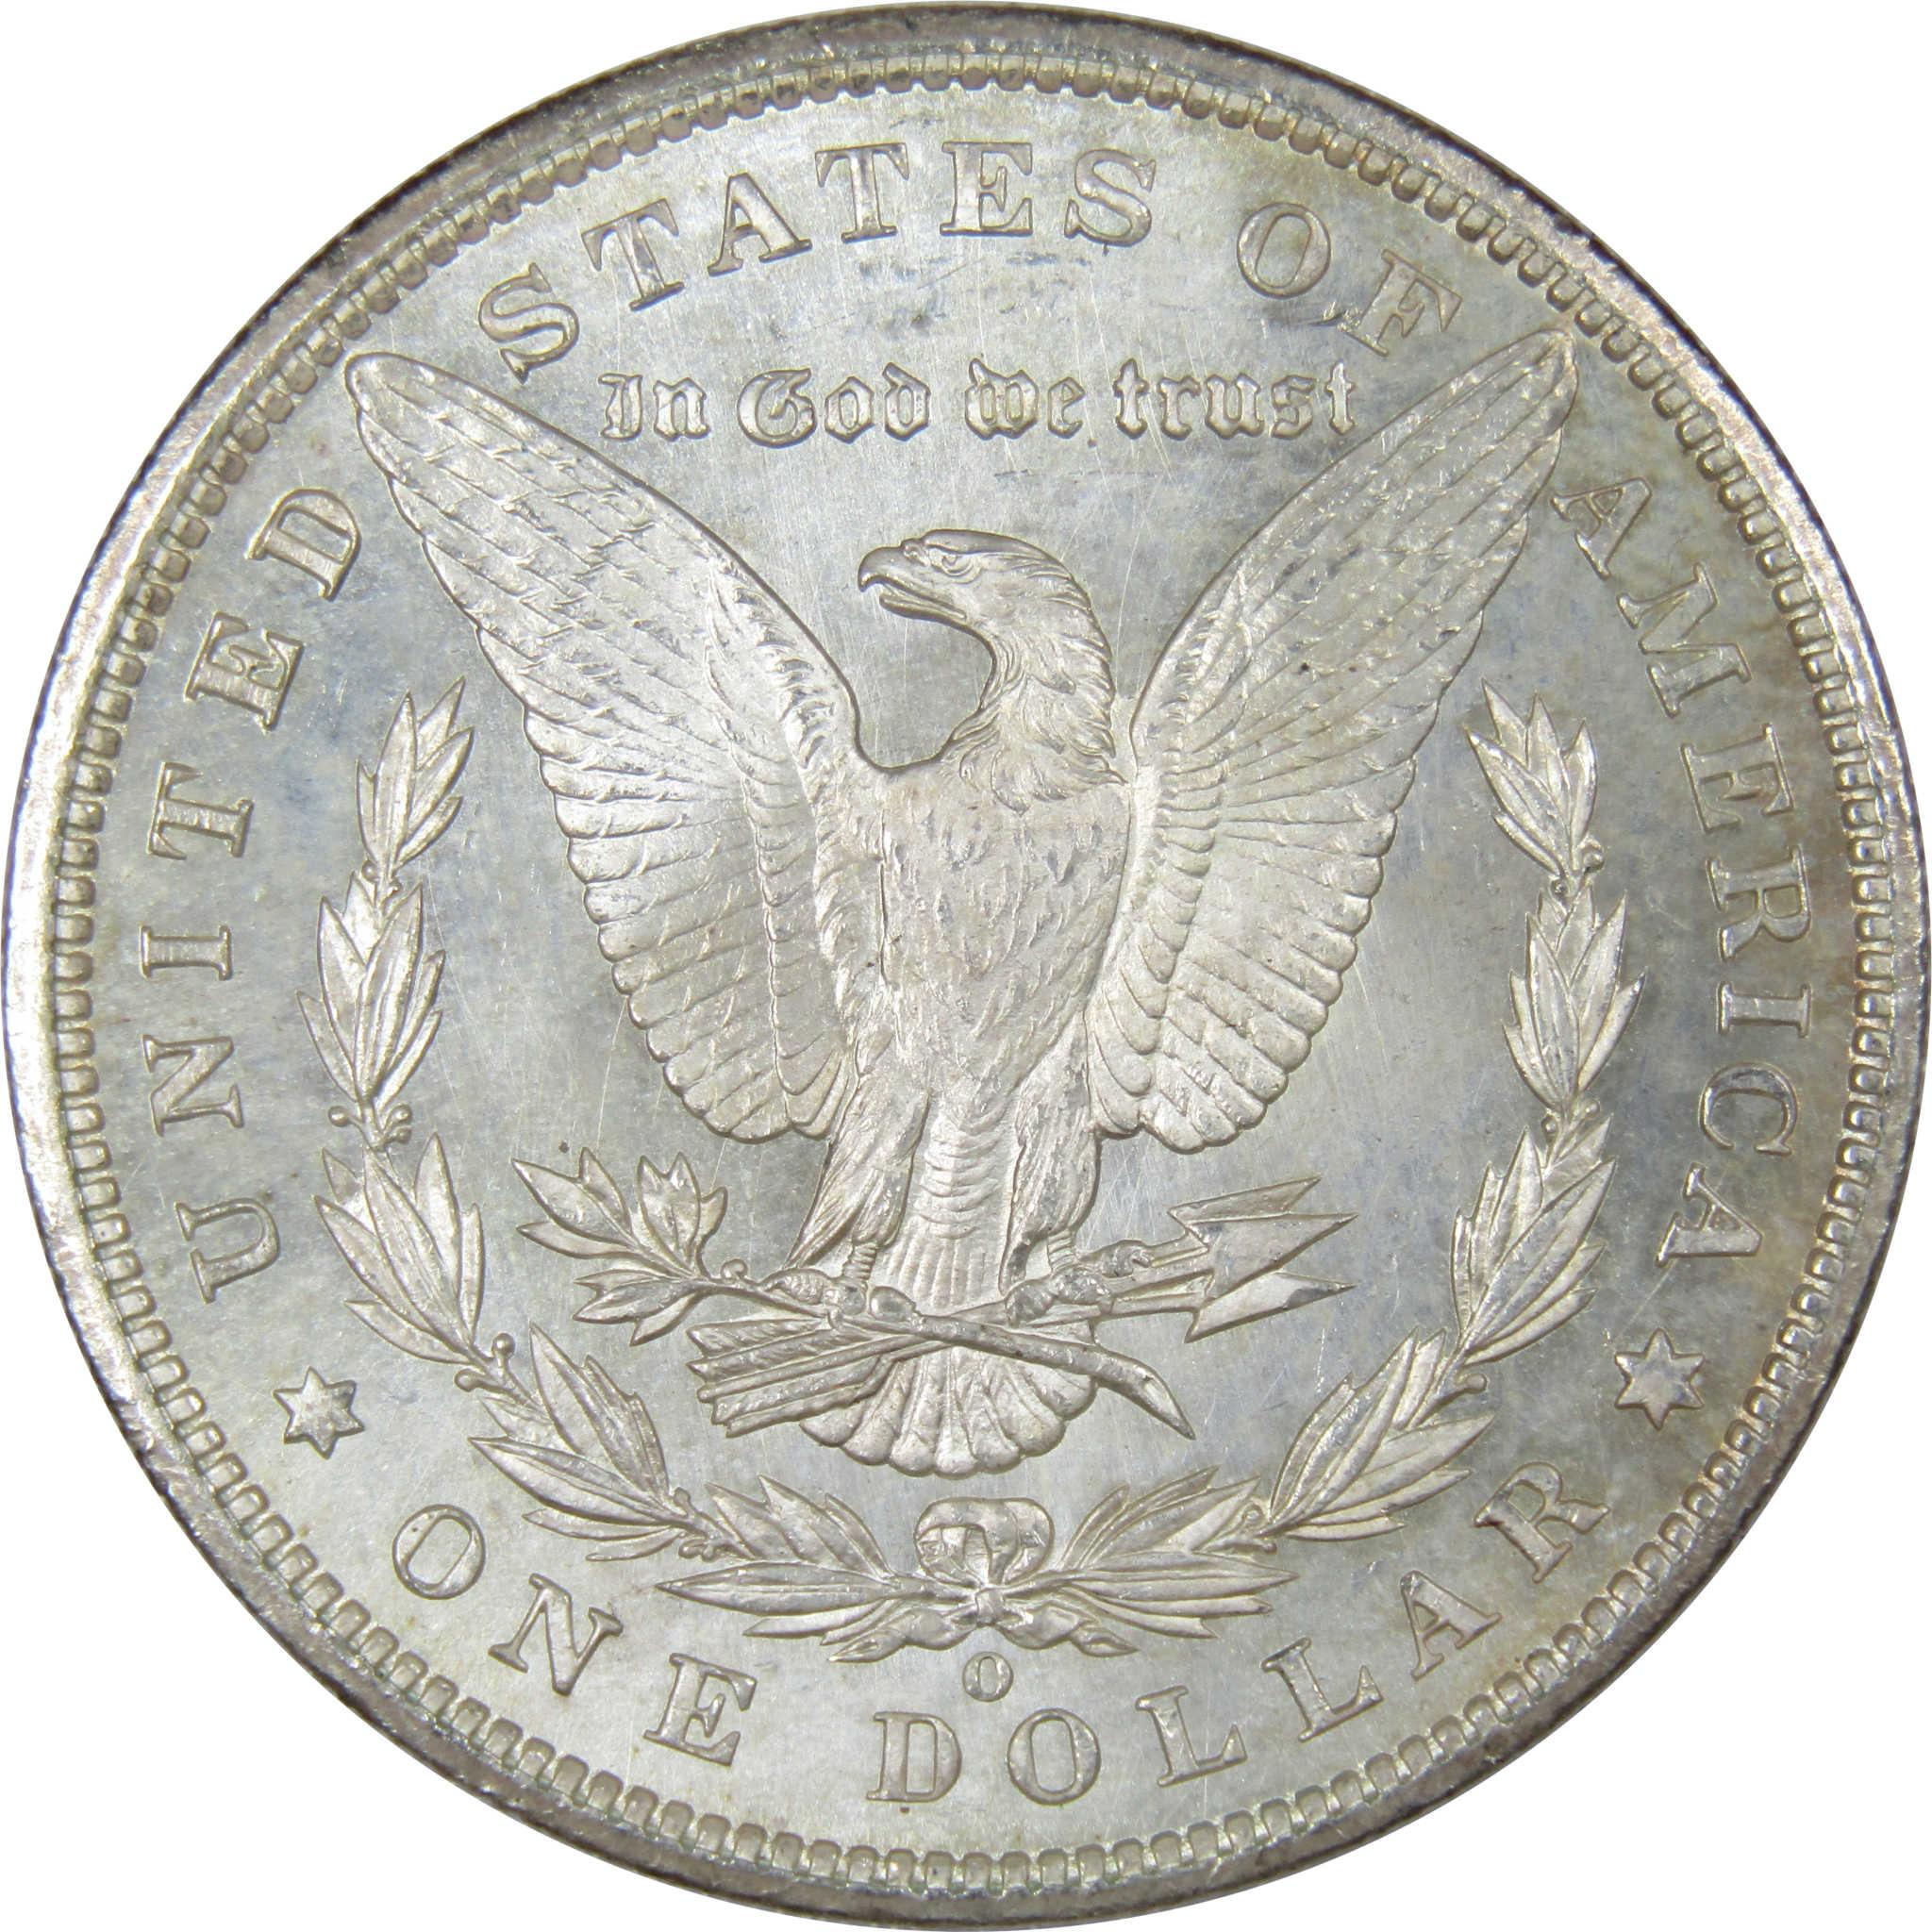 1900 O Morgan Dollar BU Uncirculated Mint State 90% Silver $1 US Coin - Morgan coin - Morgan silver dollar - Morgan silver dollar for sale - Profile Coins &amp; Collectibles